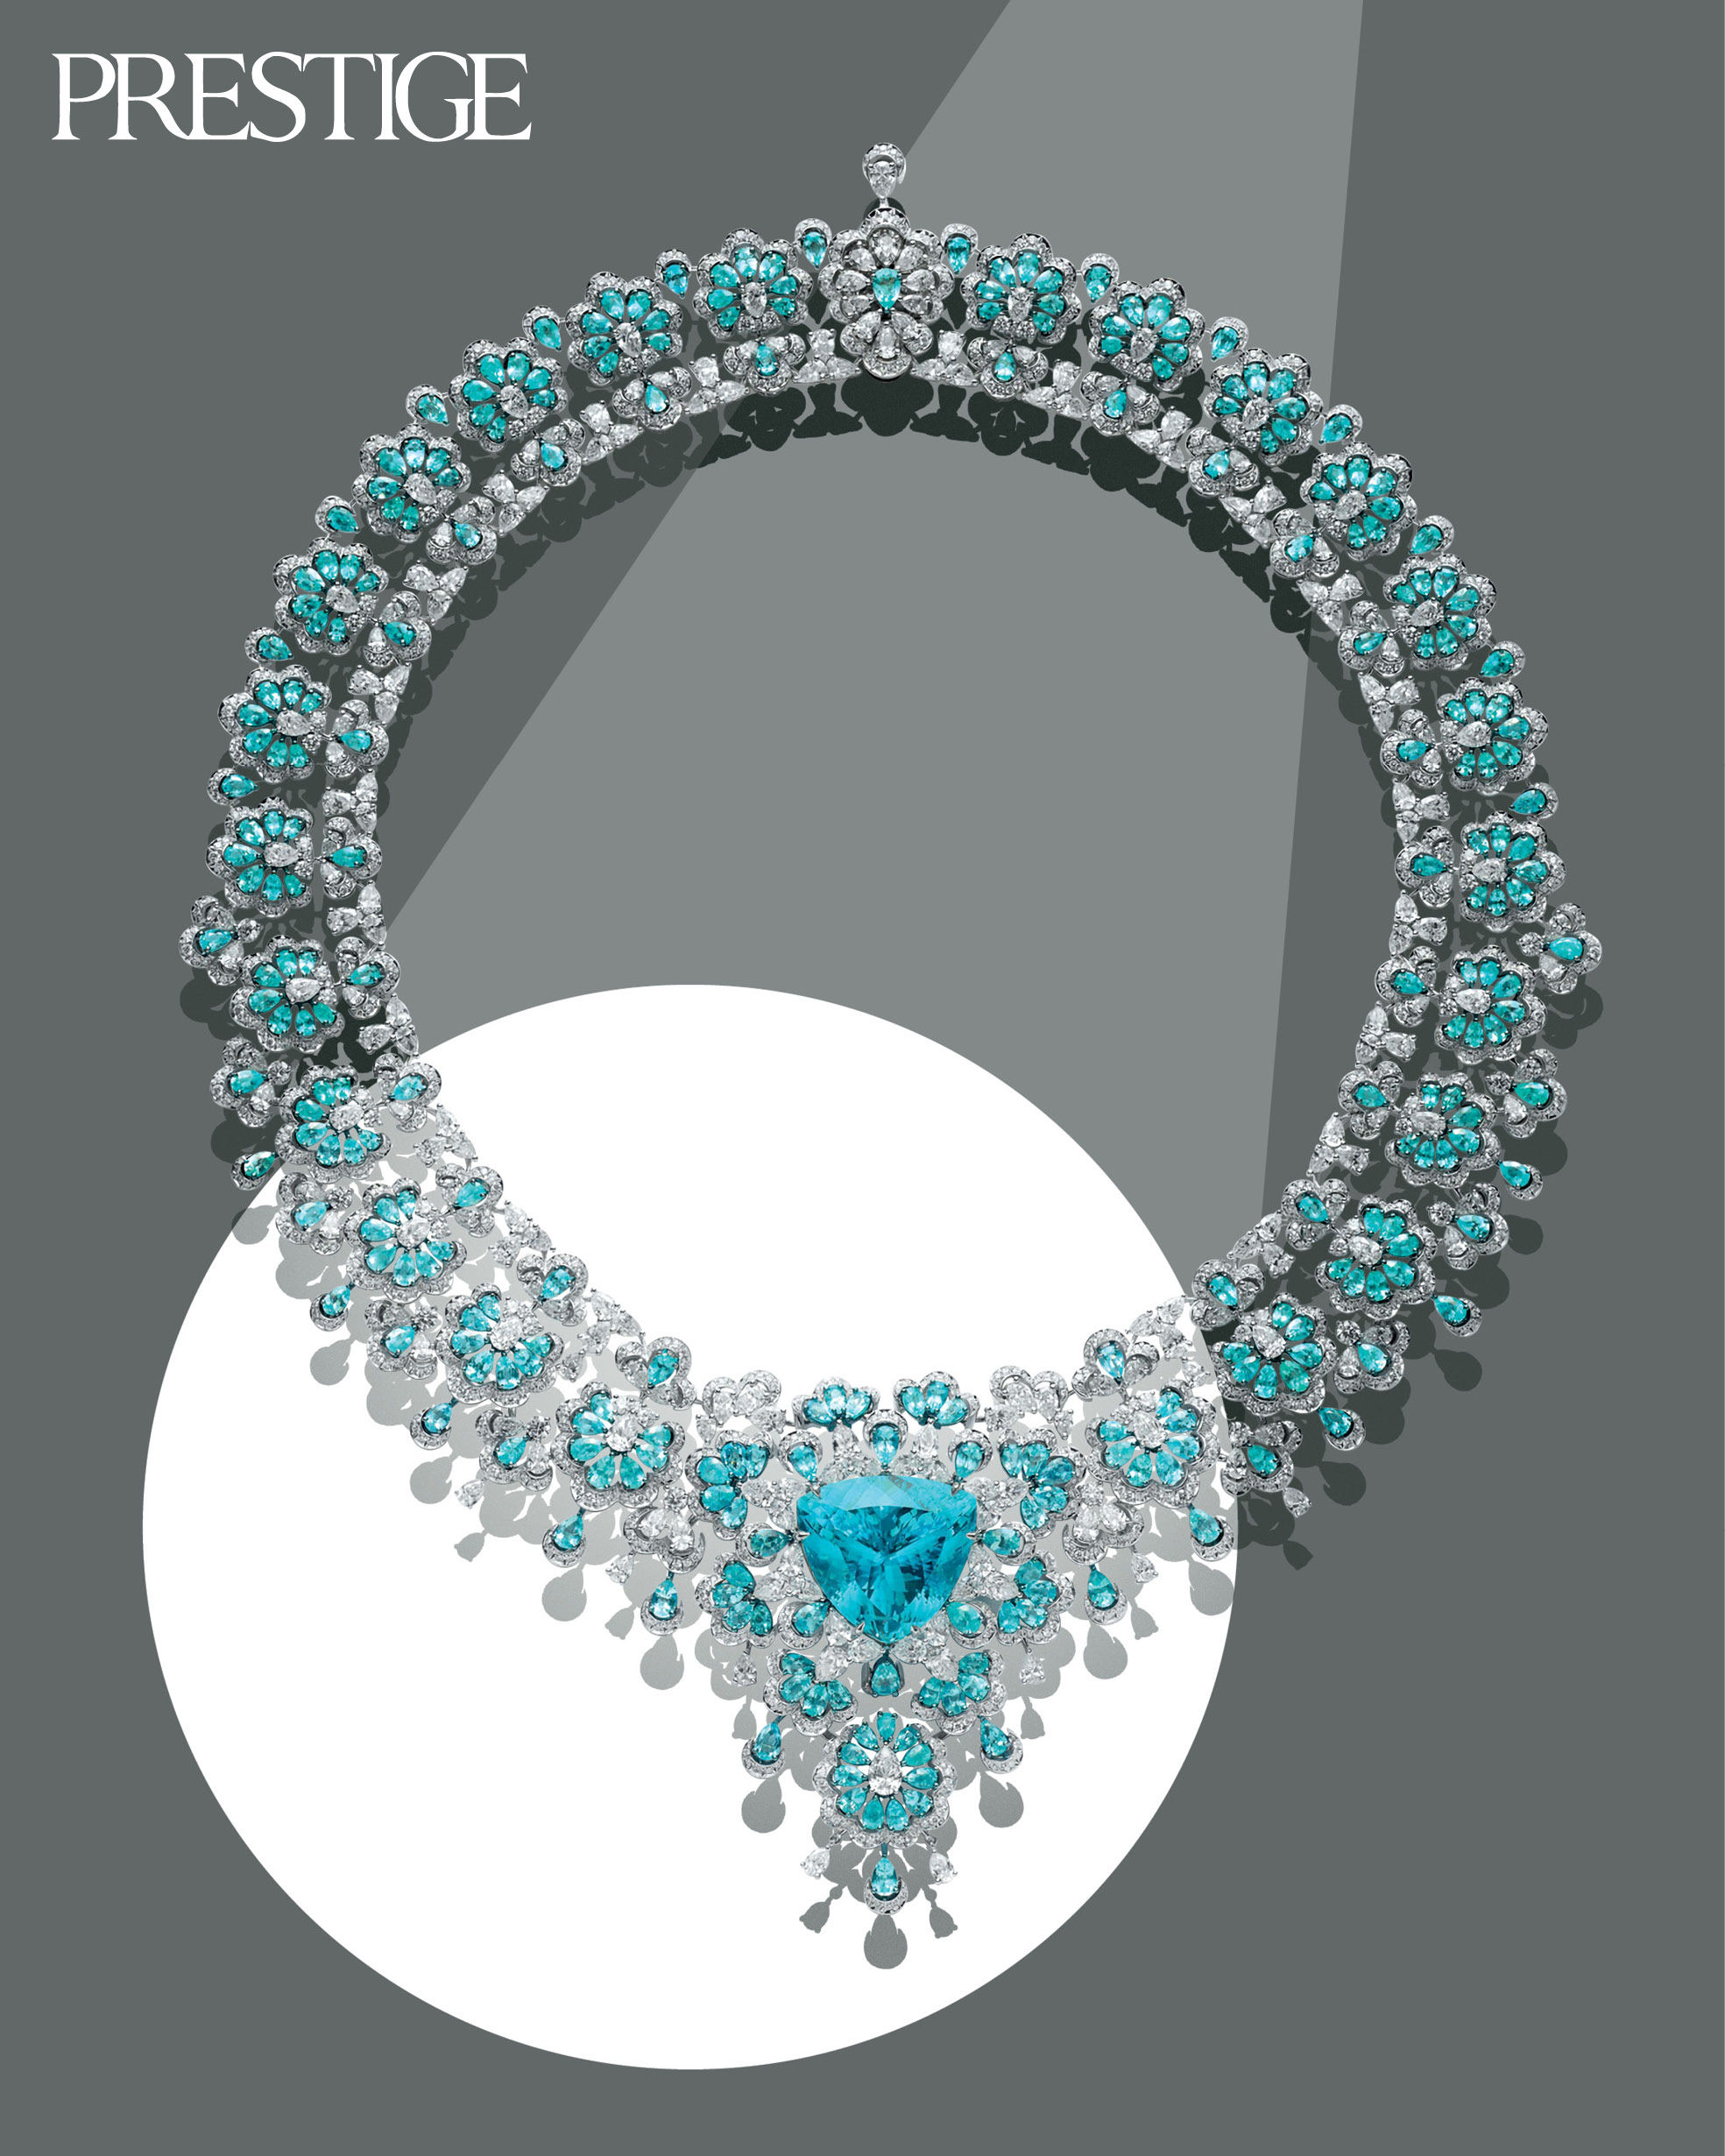 Ocean-inspired high jewellery for spring